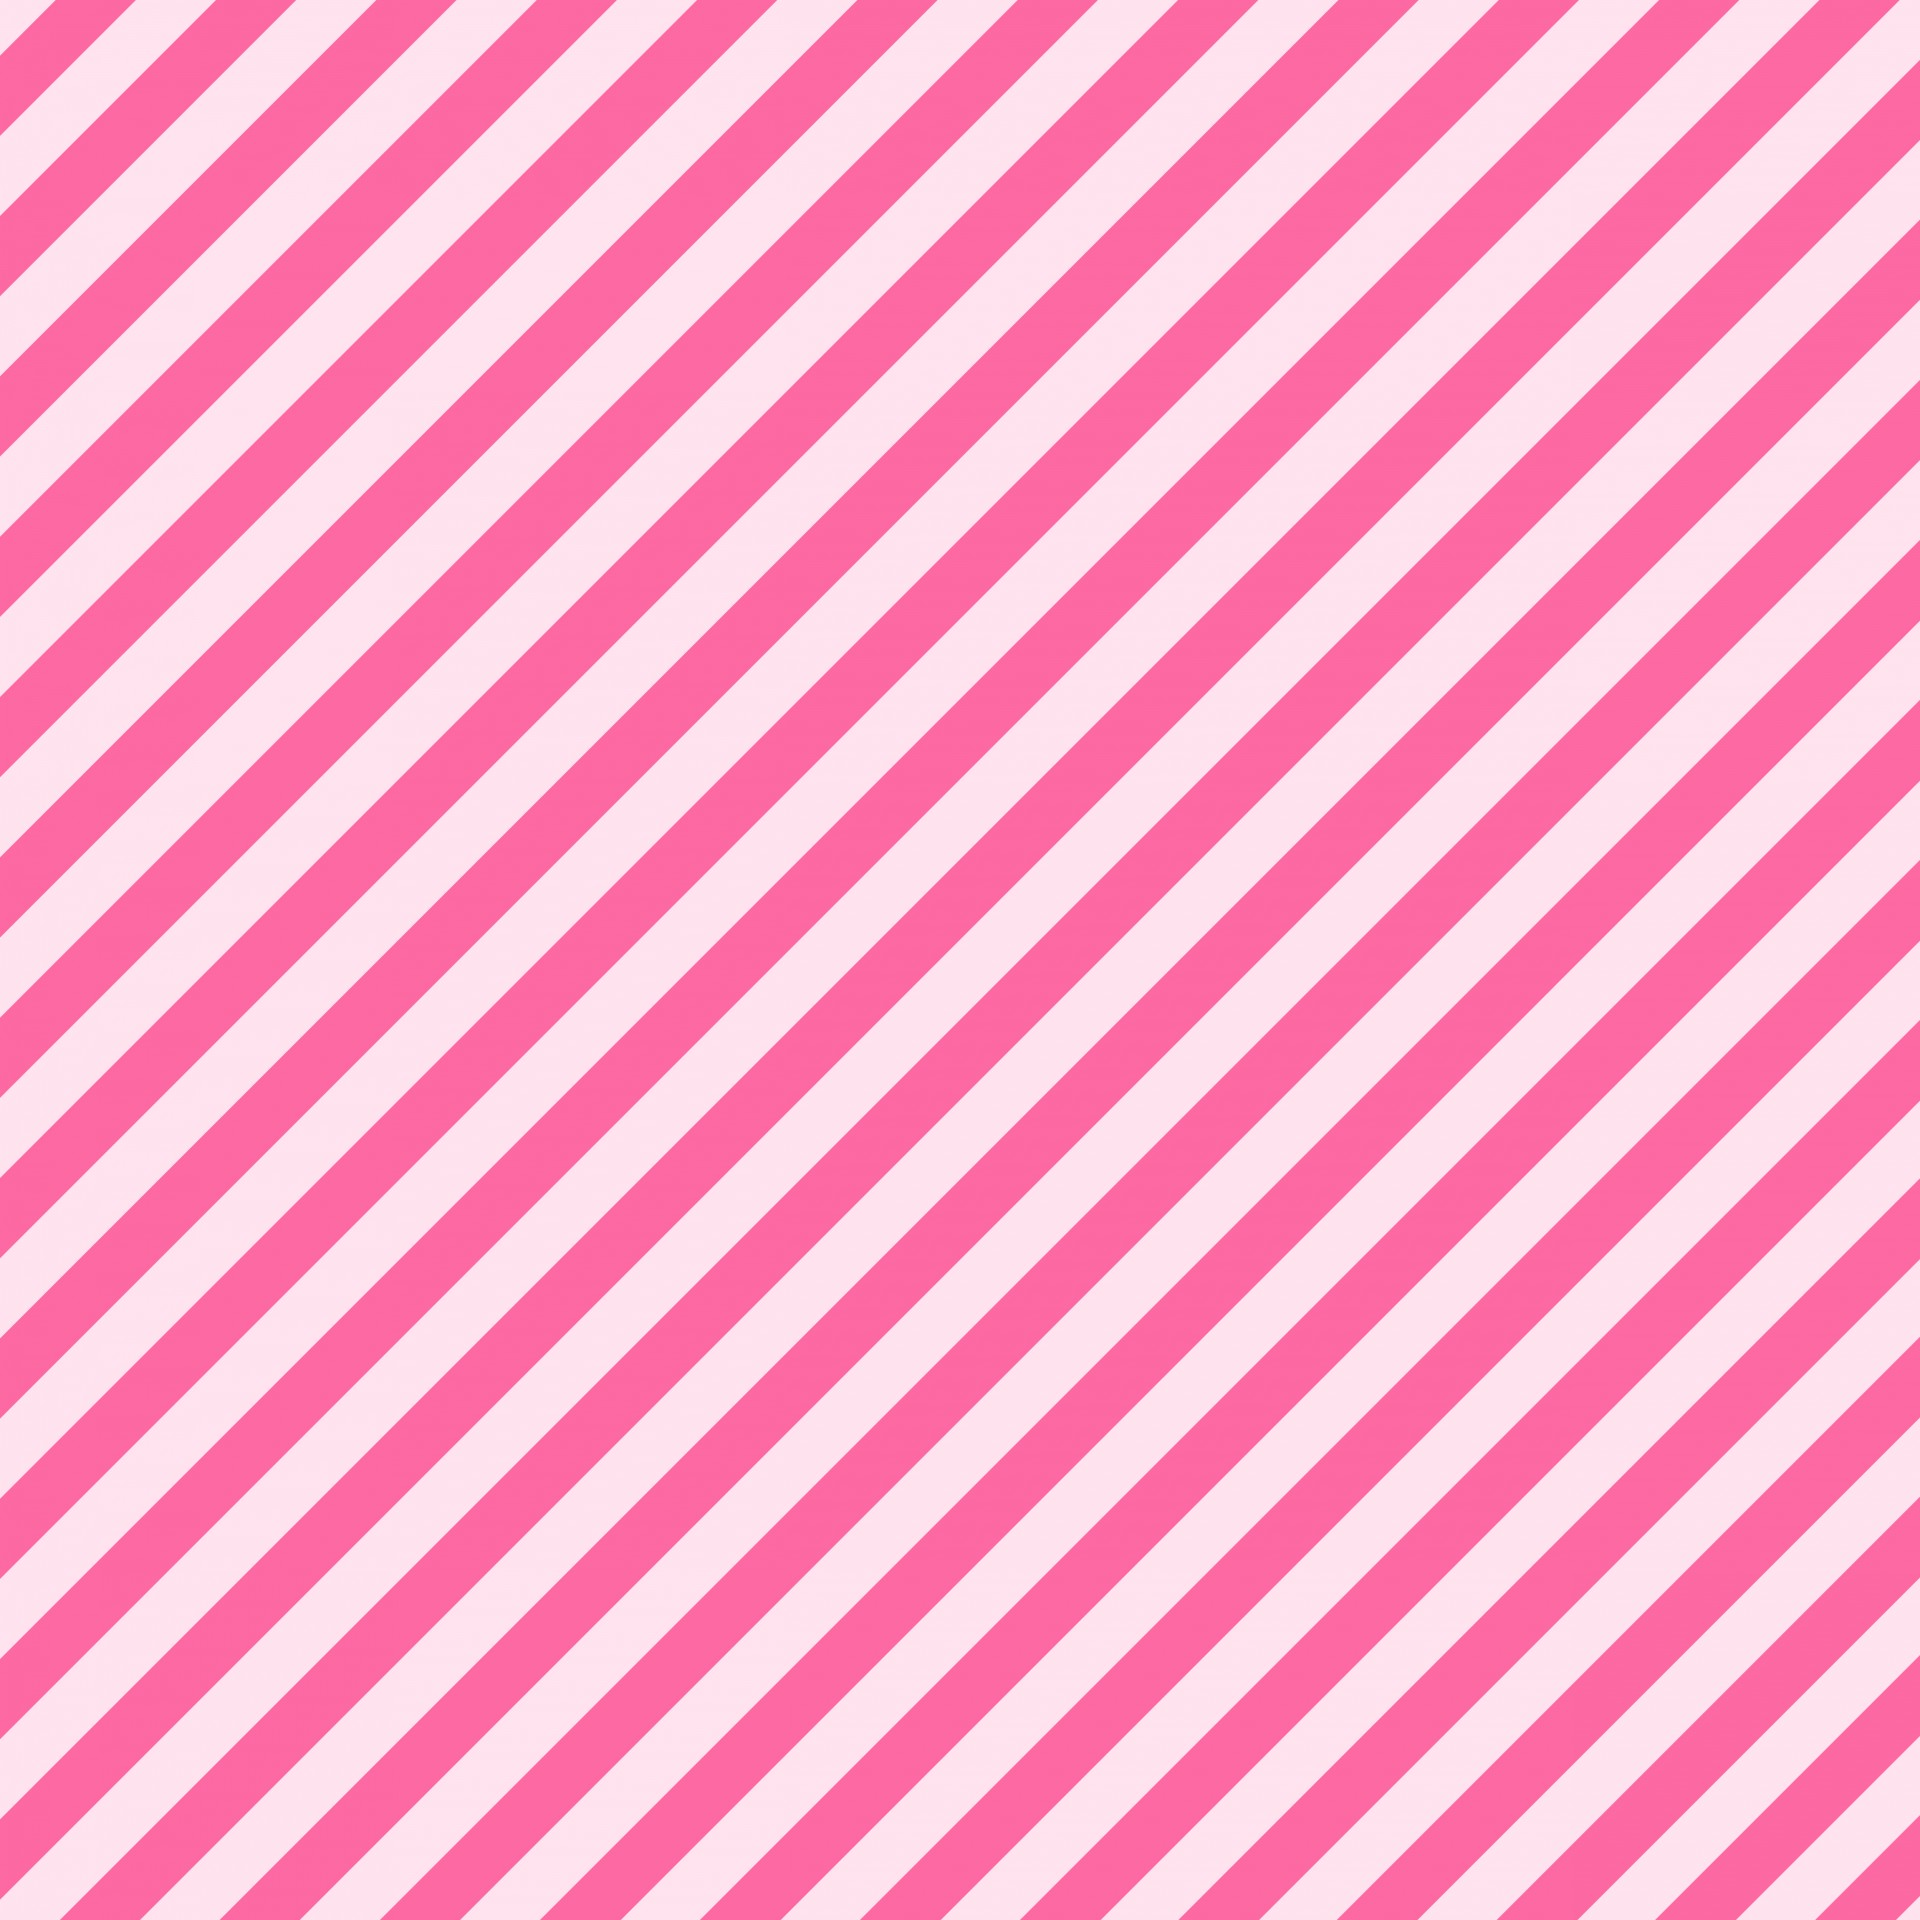 Stripes,striped,stripe,pink,diagonal - free image from